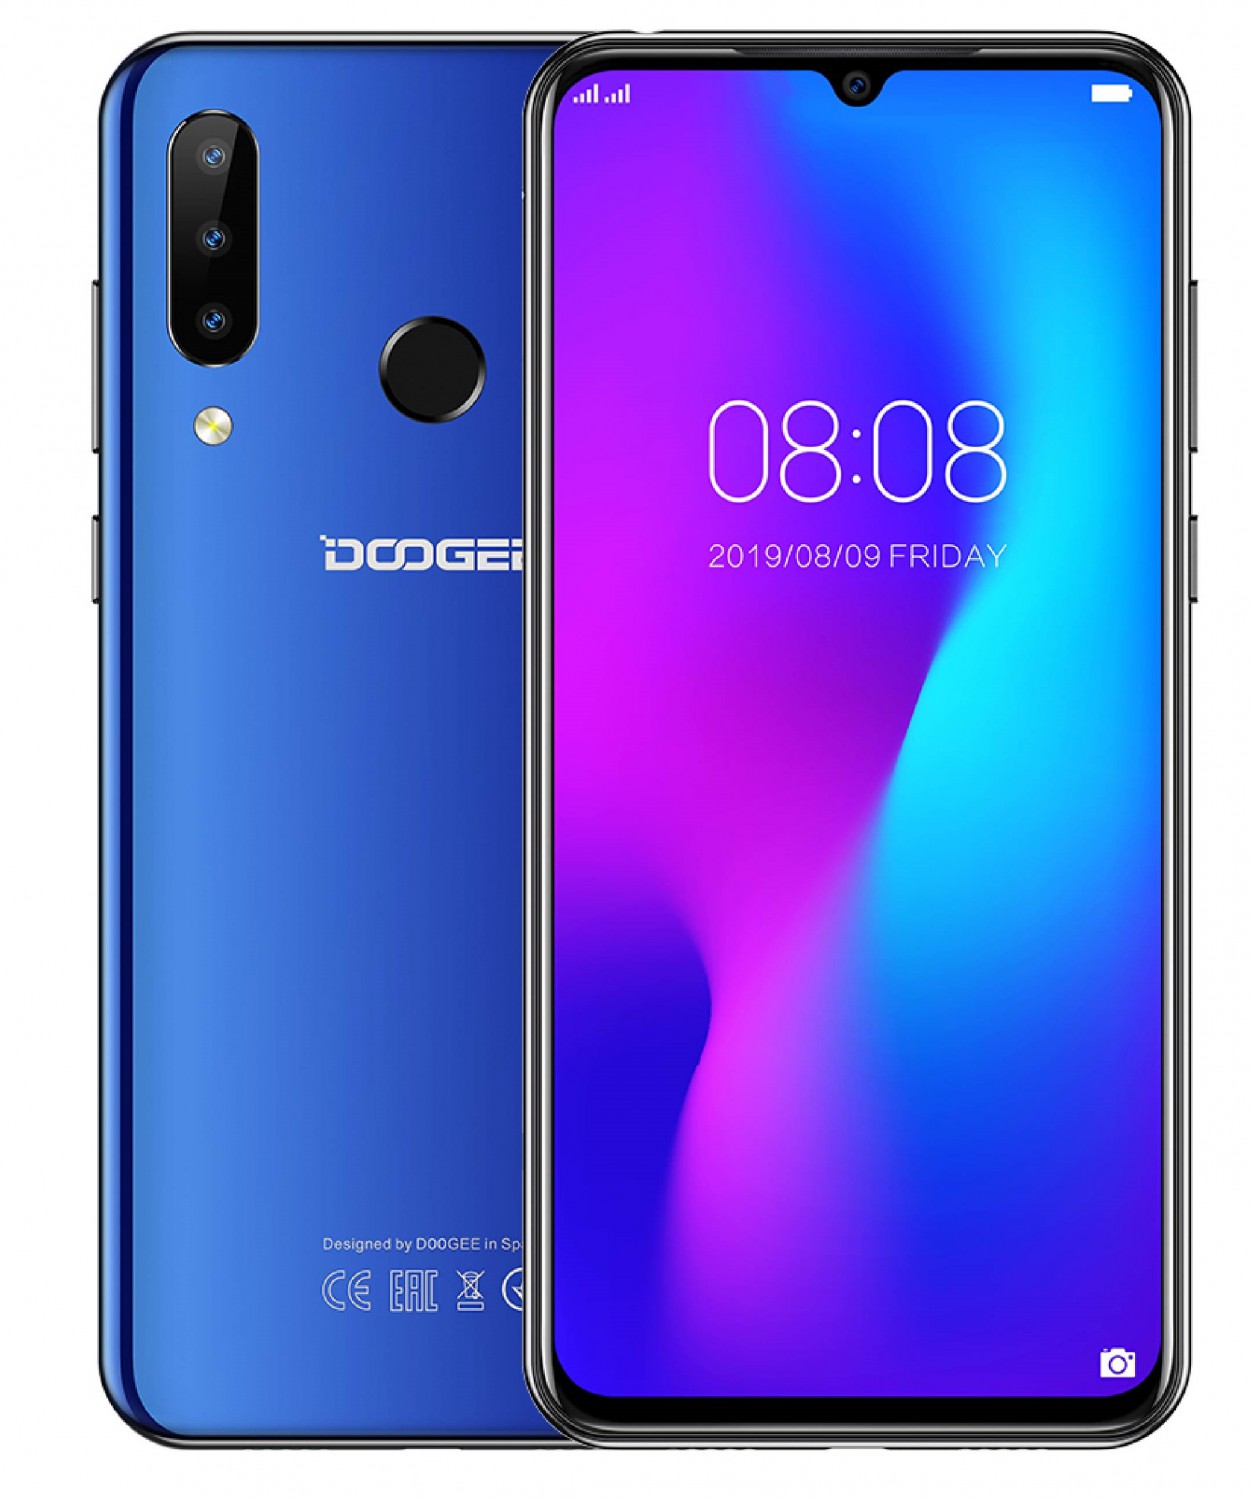 Doogee Y9 Plus 4GB/64GB modrá